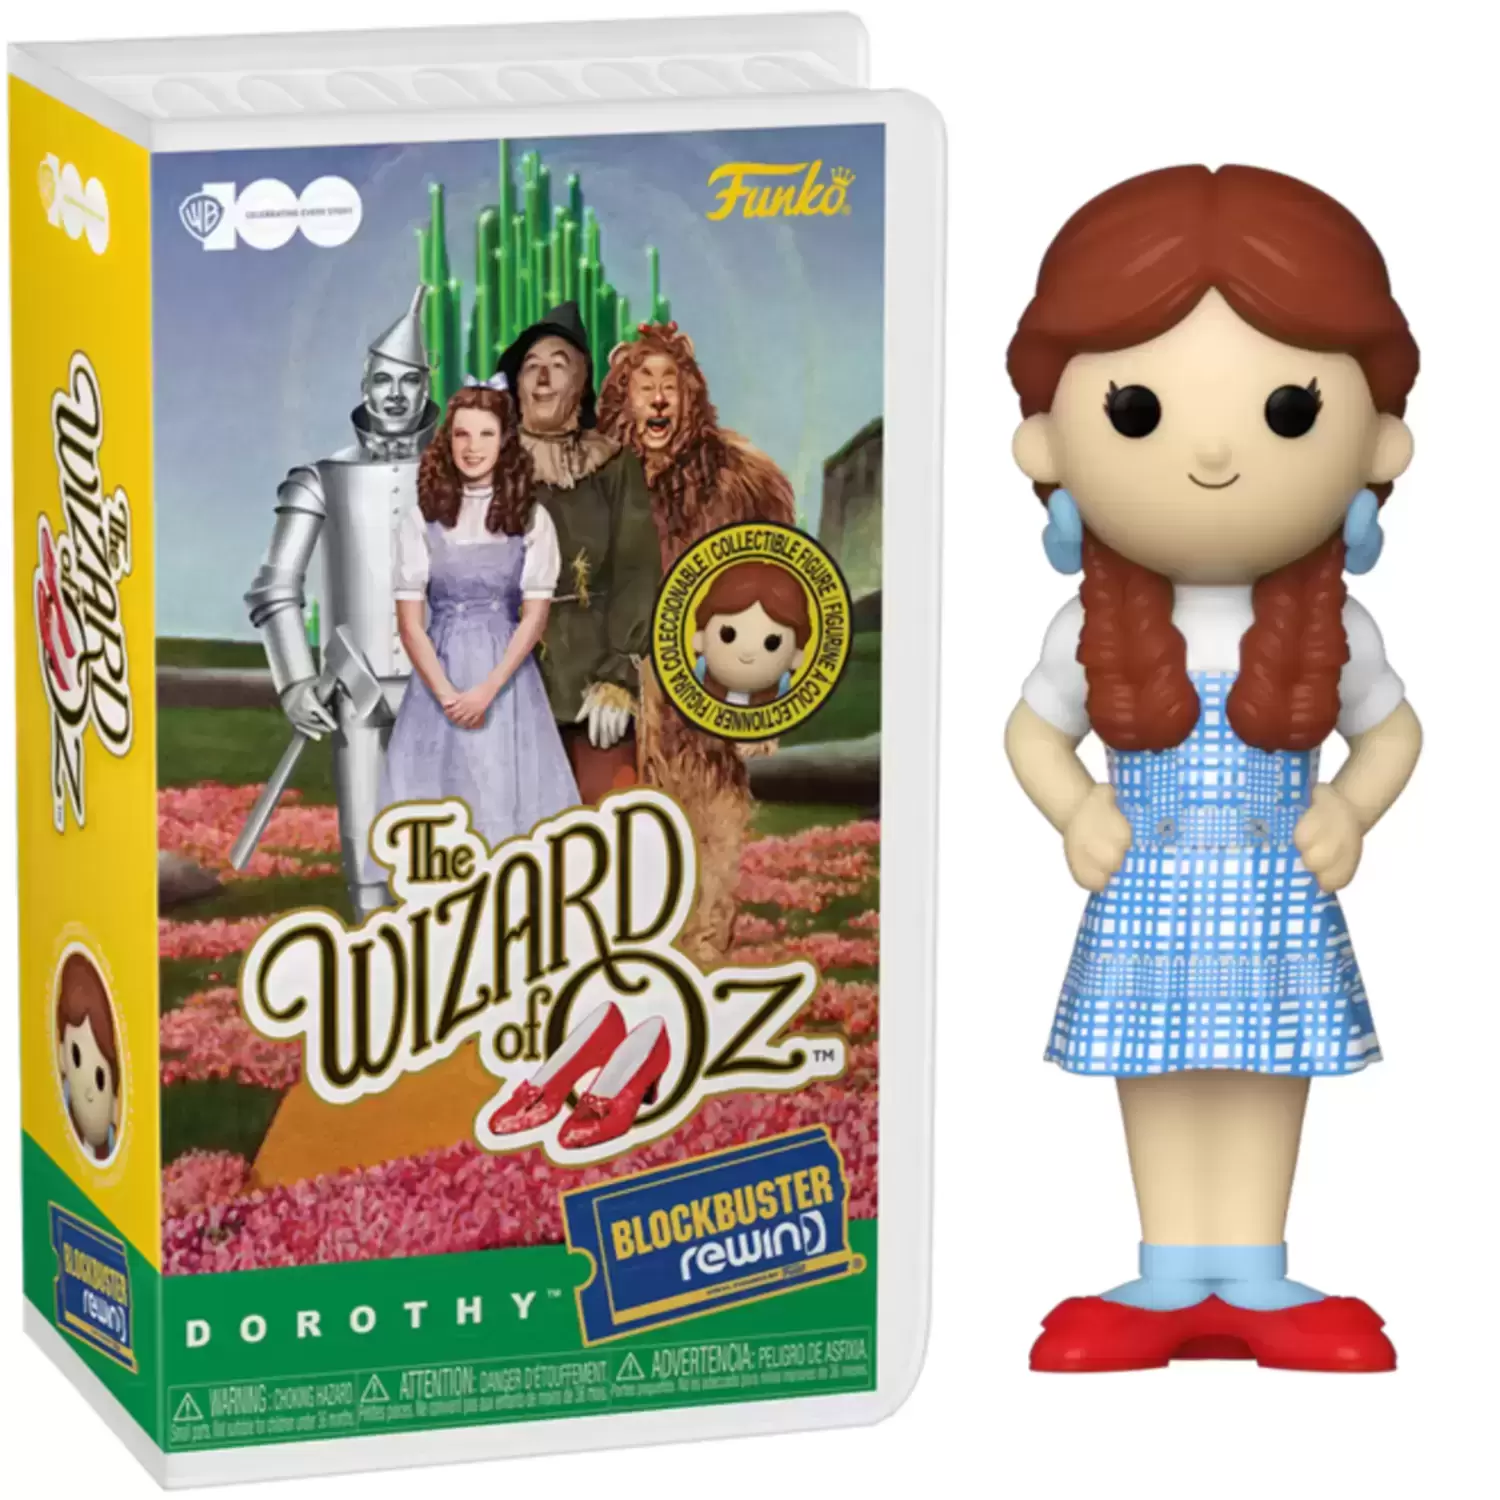 Blockbuster Rewind - The Wizard of Oz - Dorothy